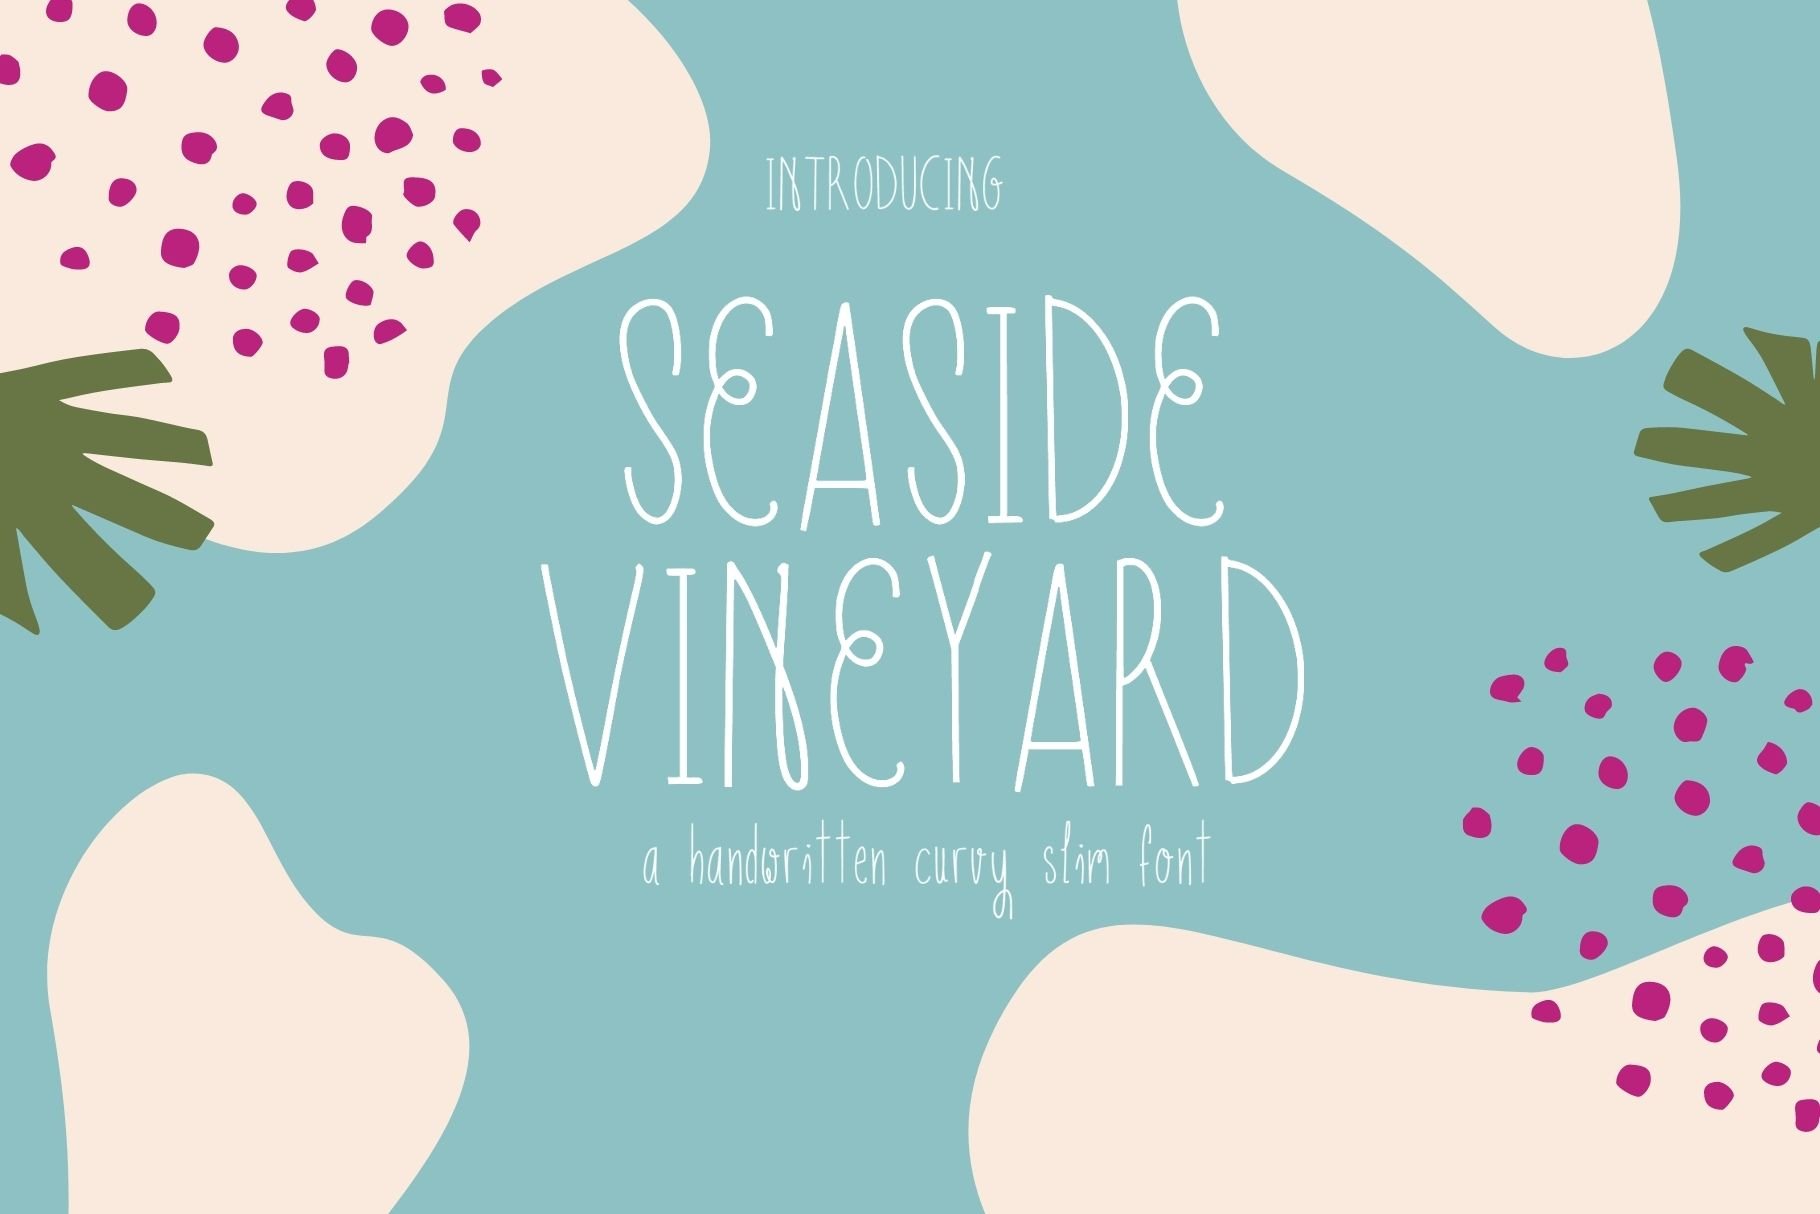 seaside vineyard font cover image.